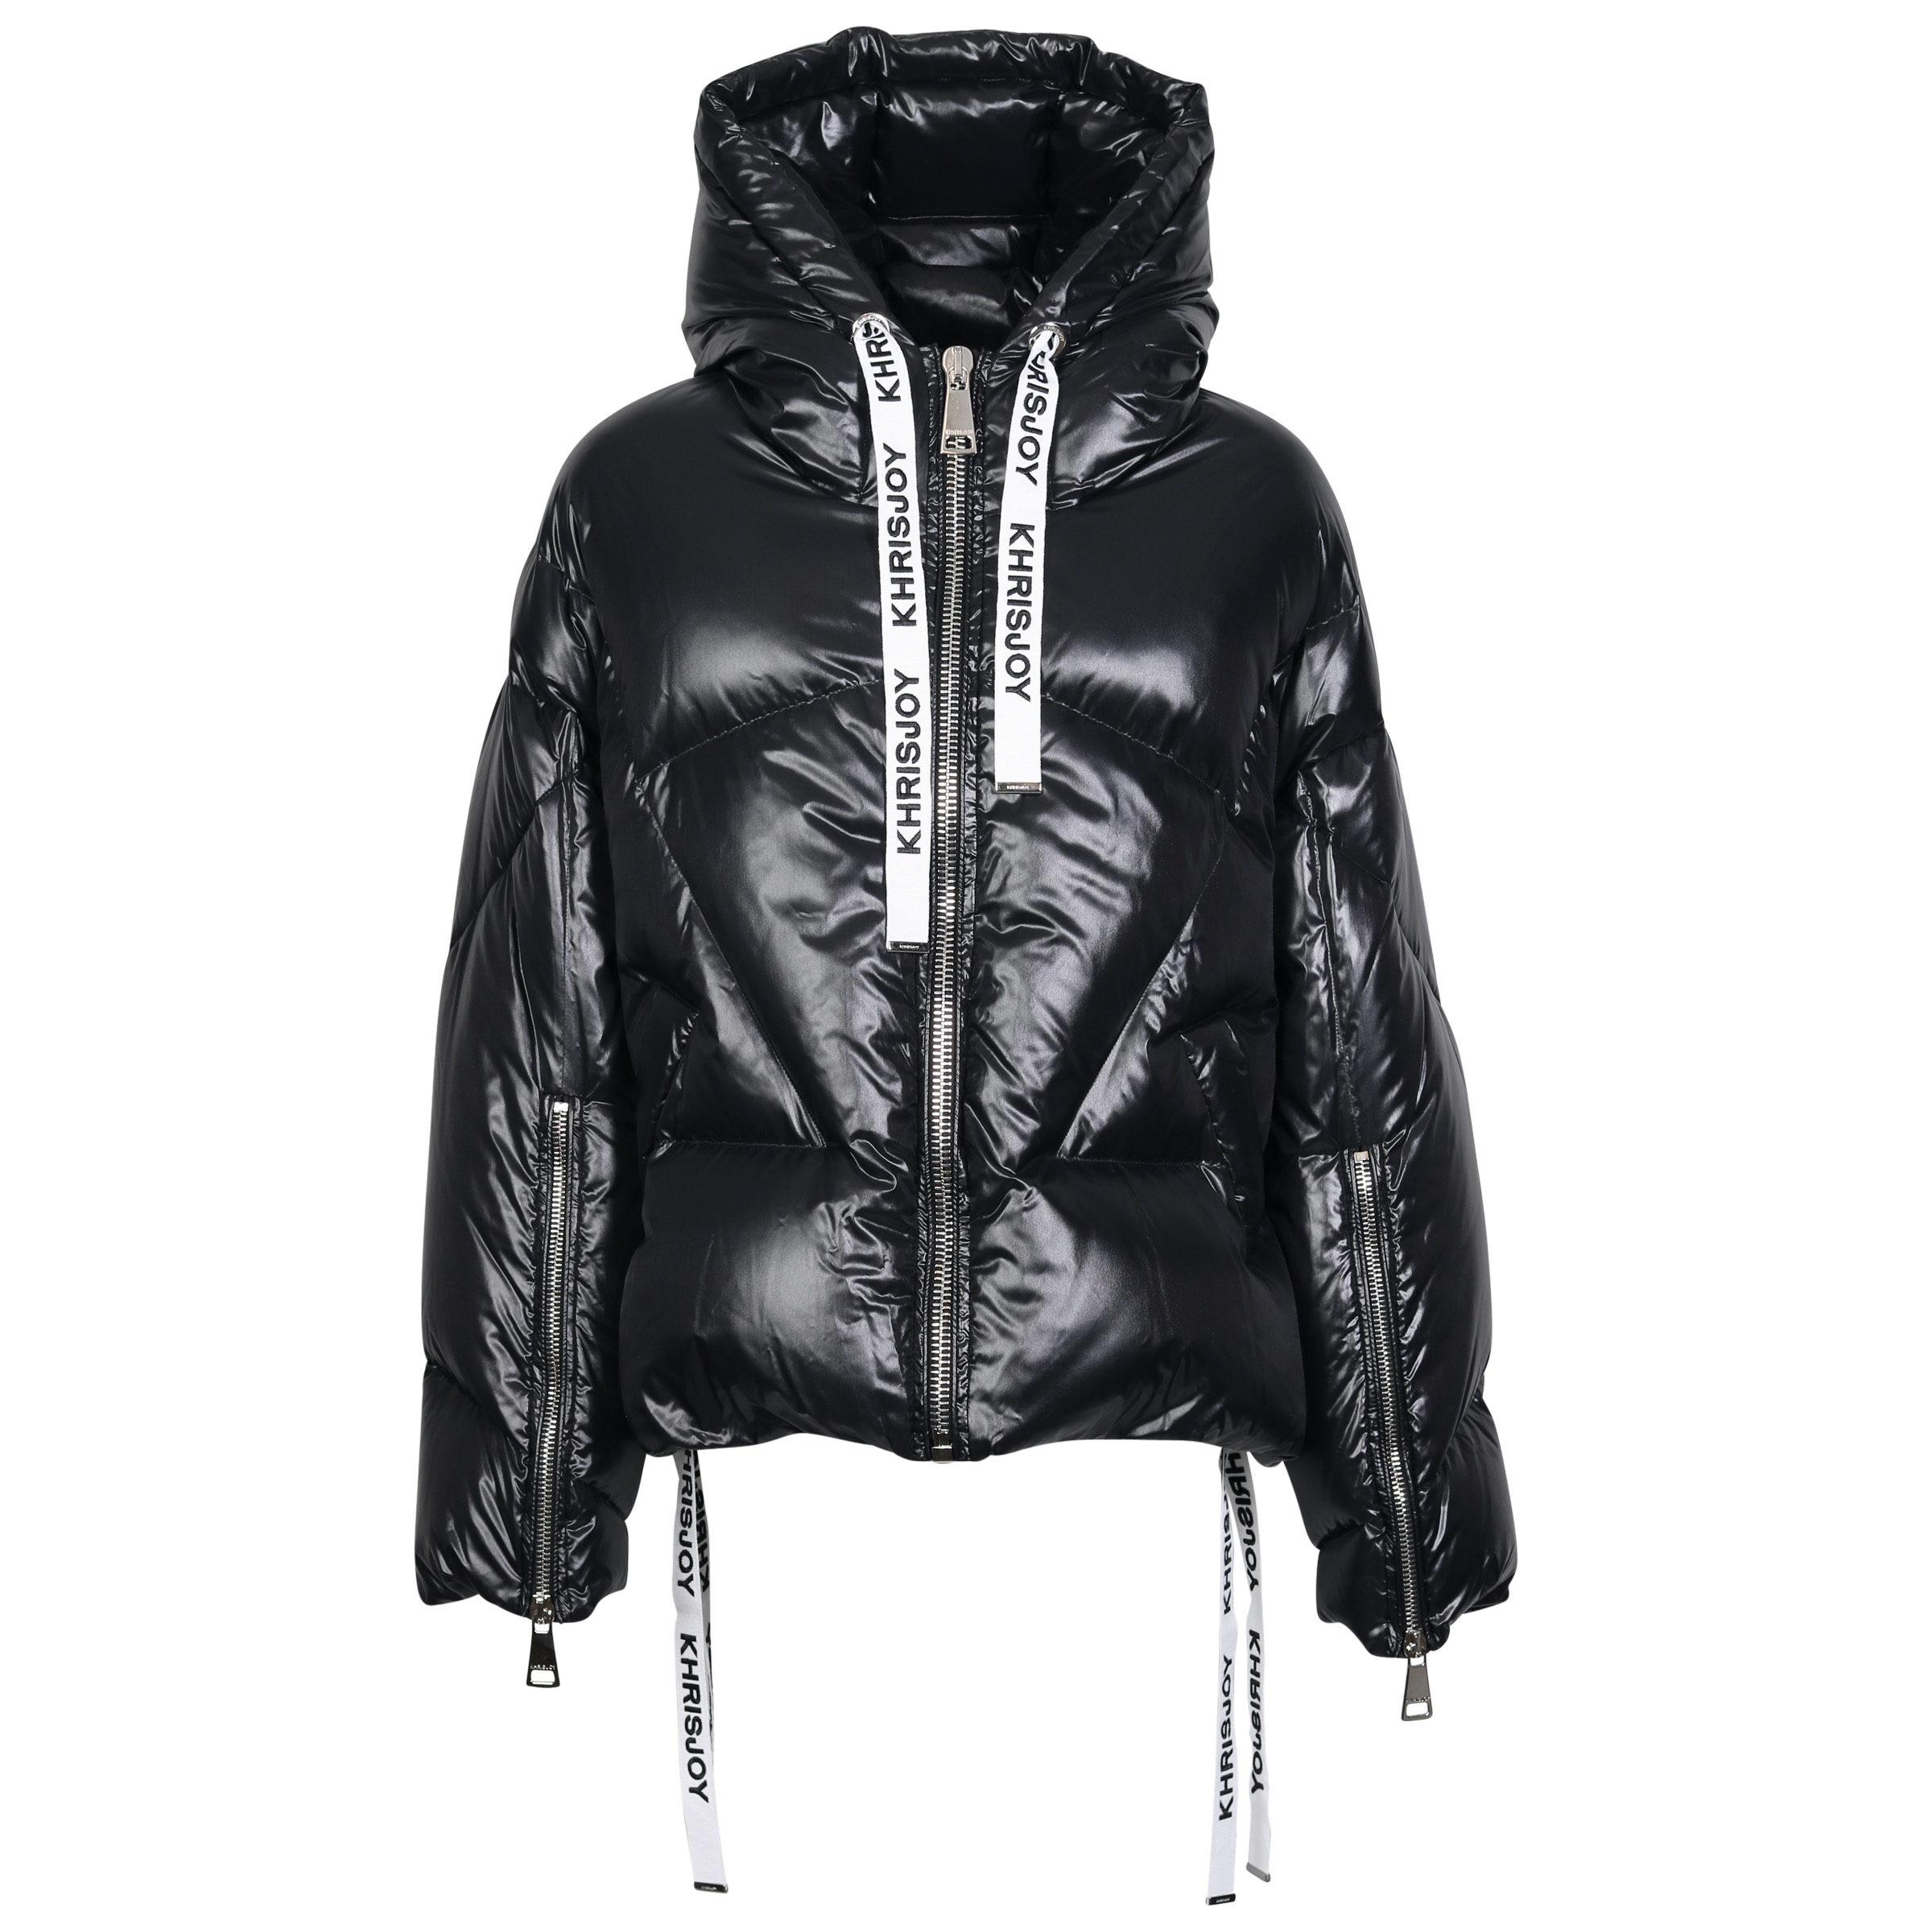 Khrisjoy Iconic Puffer Jacket in Shiny Black